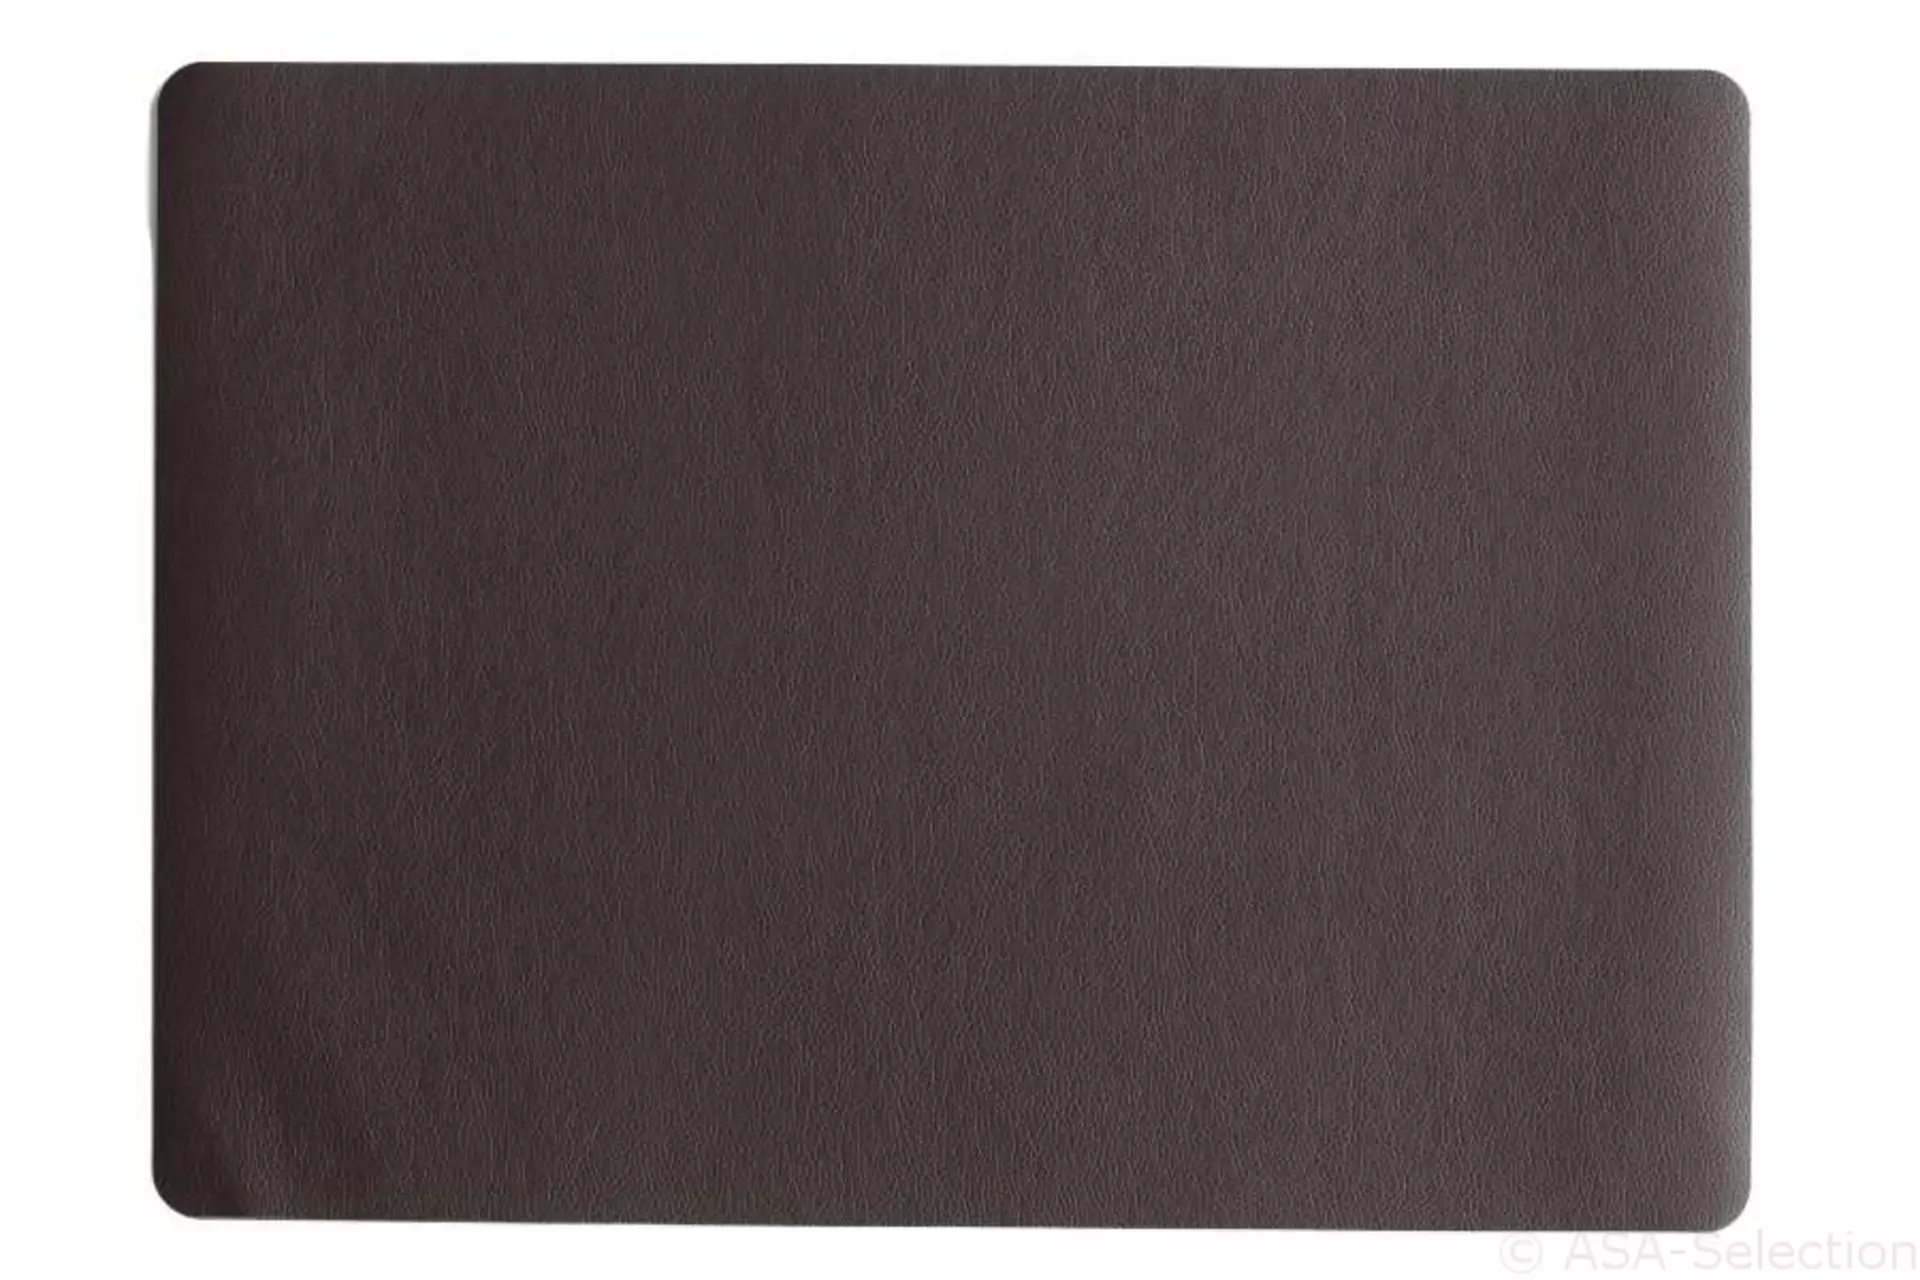 Tischset leather optic fine ASA Selection Kunststoff 33 x 46 cm